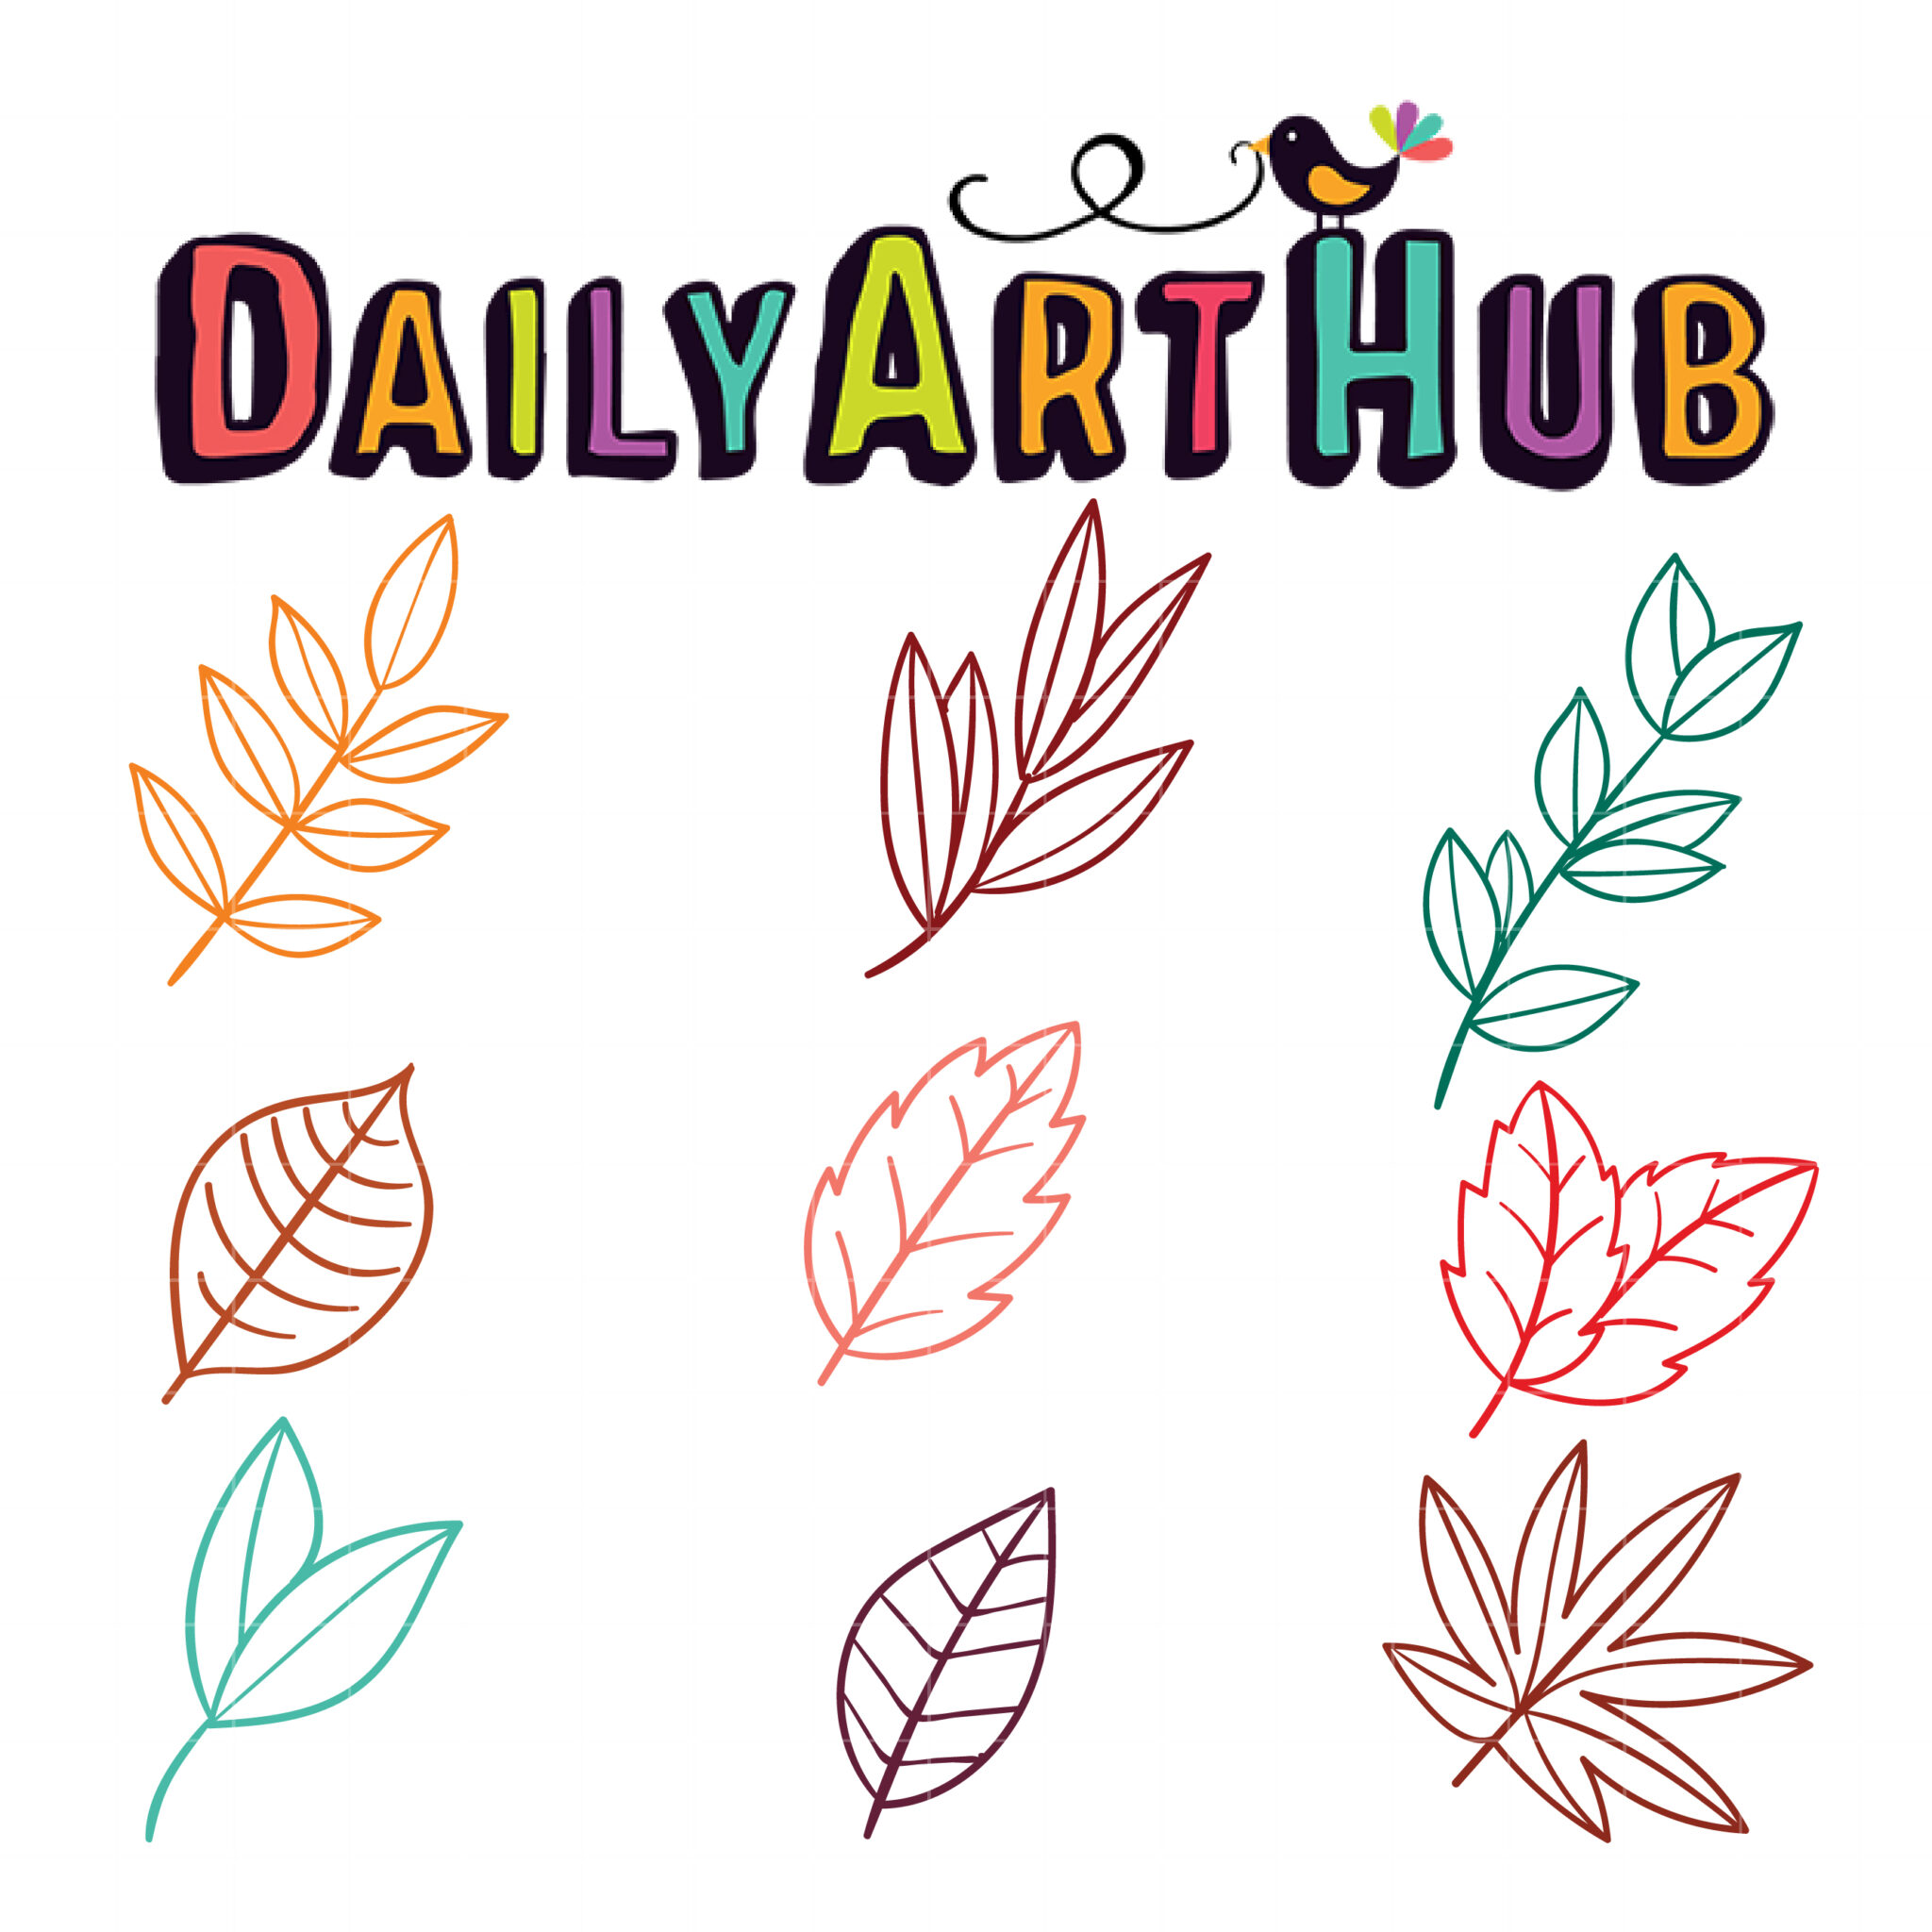 Funny Autumn Season Leaf Drawing Illustration स्टॉक वेक्टर (रॉयल्टी फ़्री)  2131515475 | Shutterstock